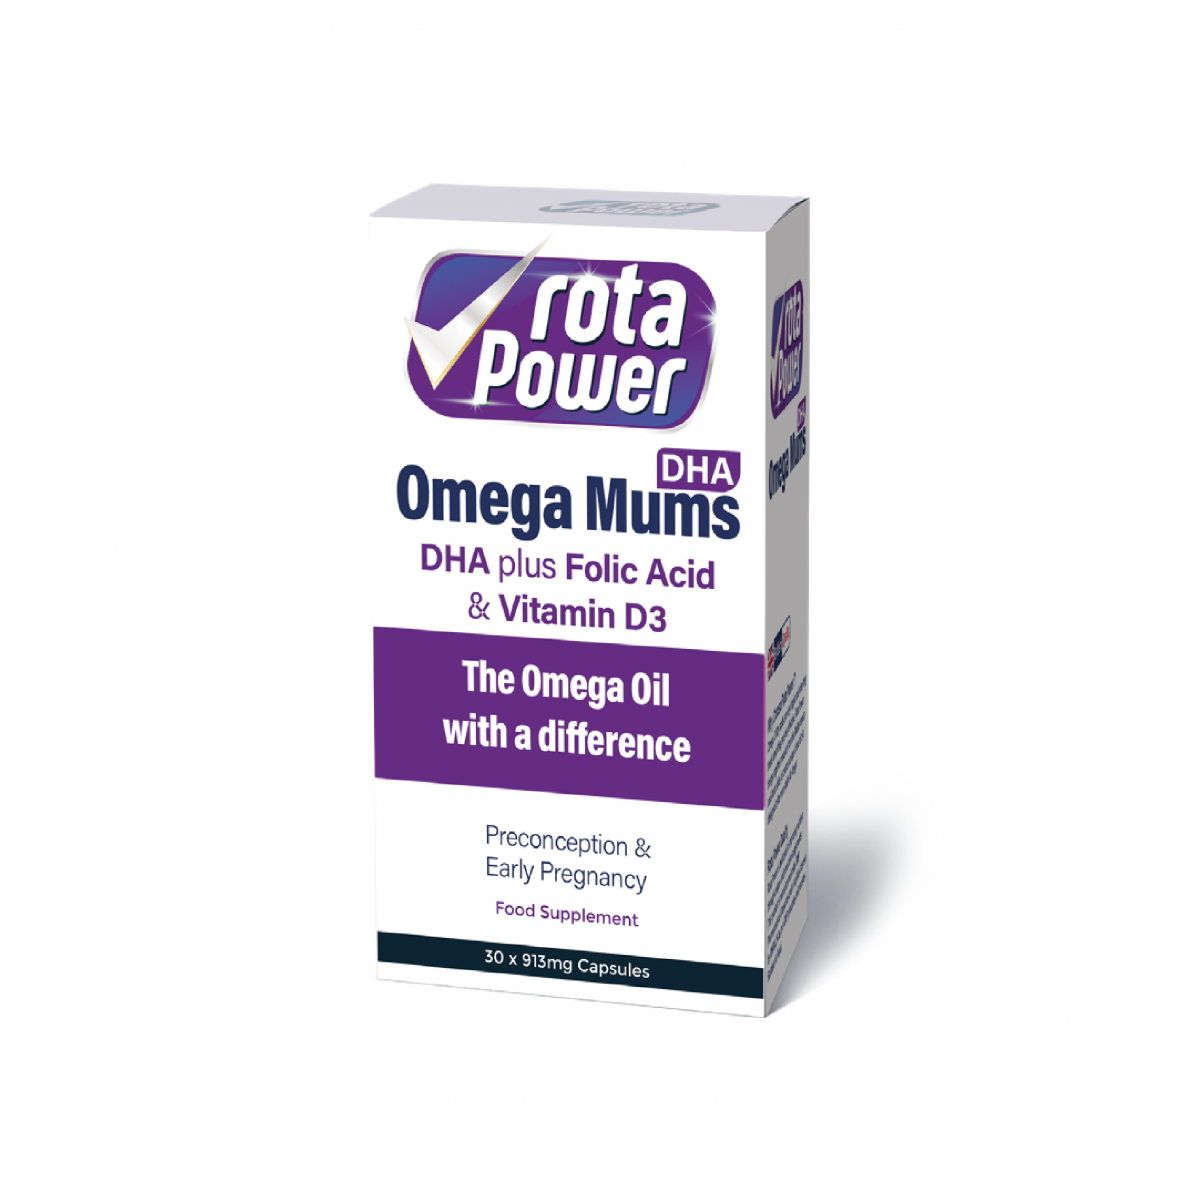 rota power omega mums DHA